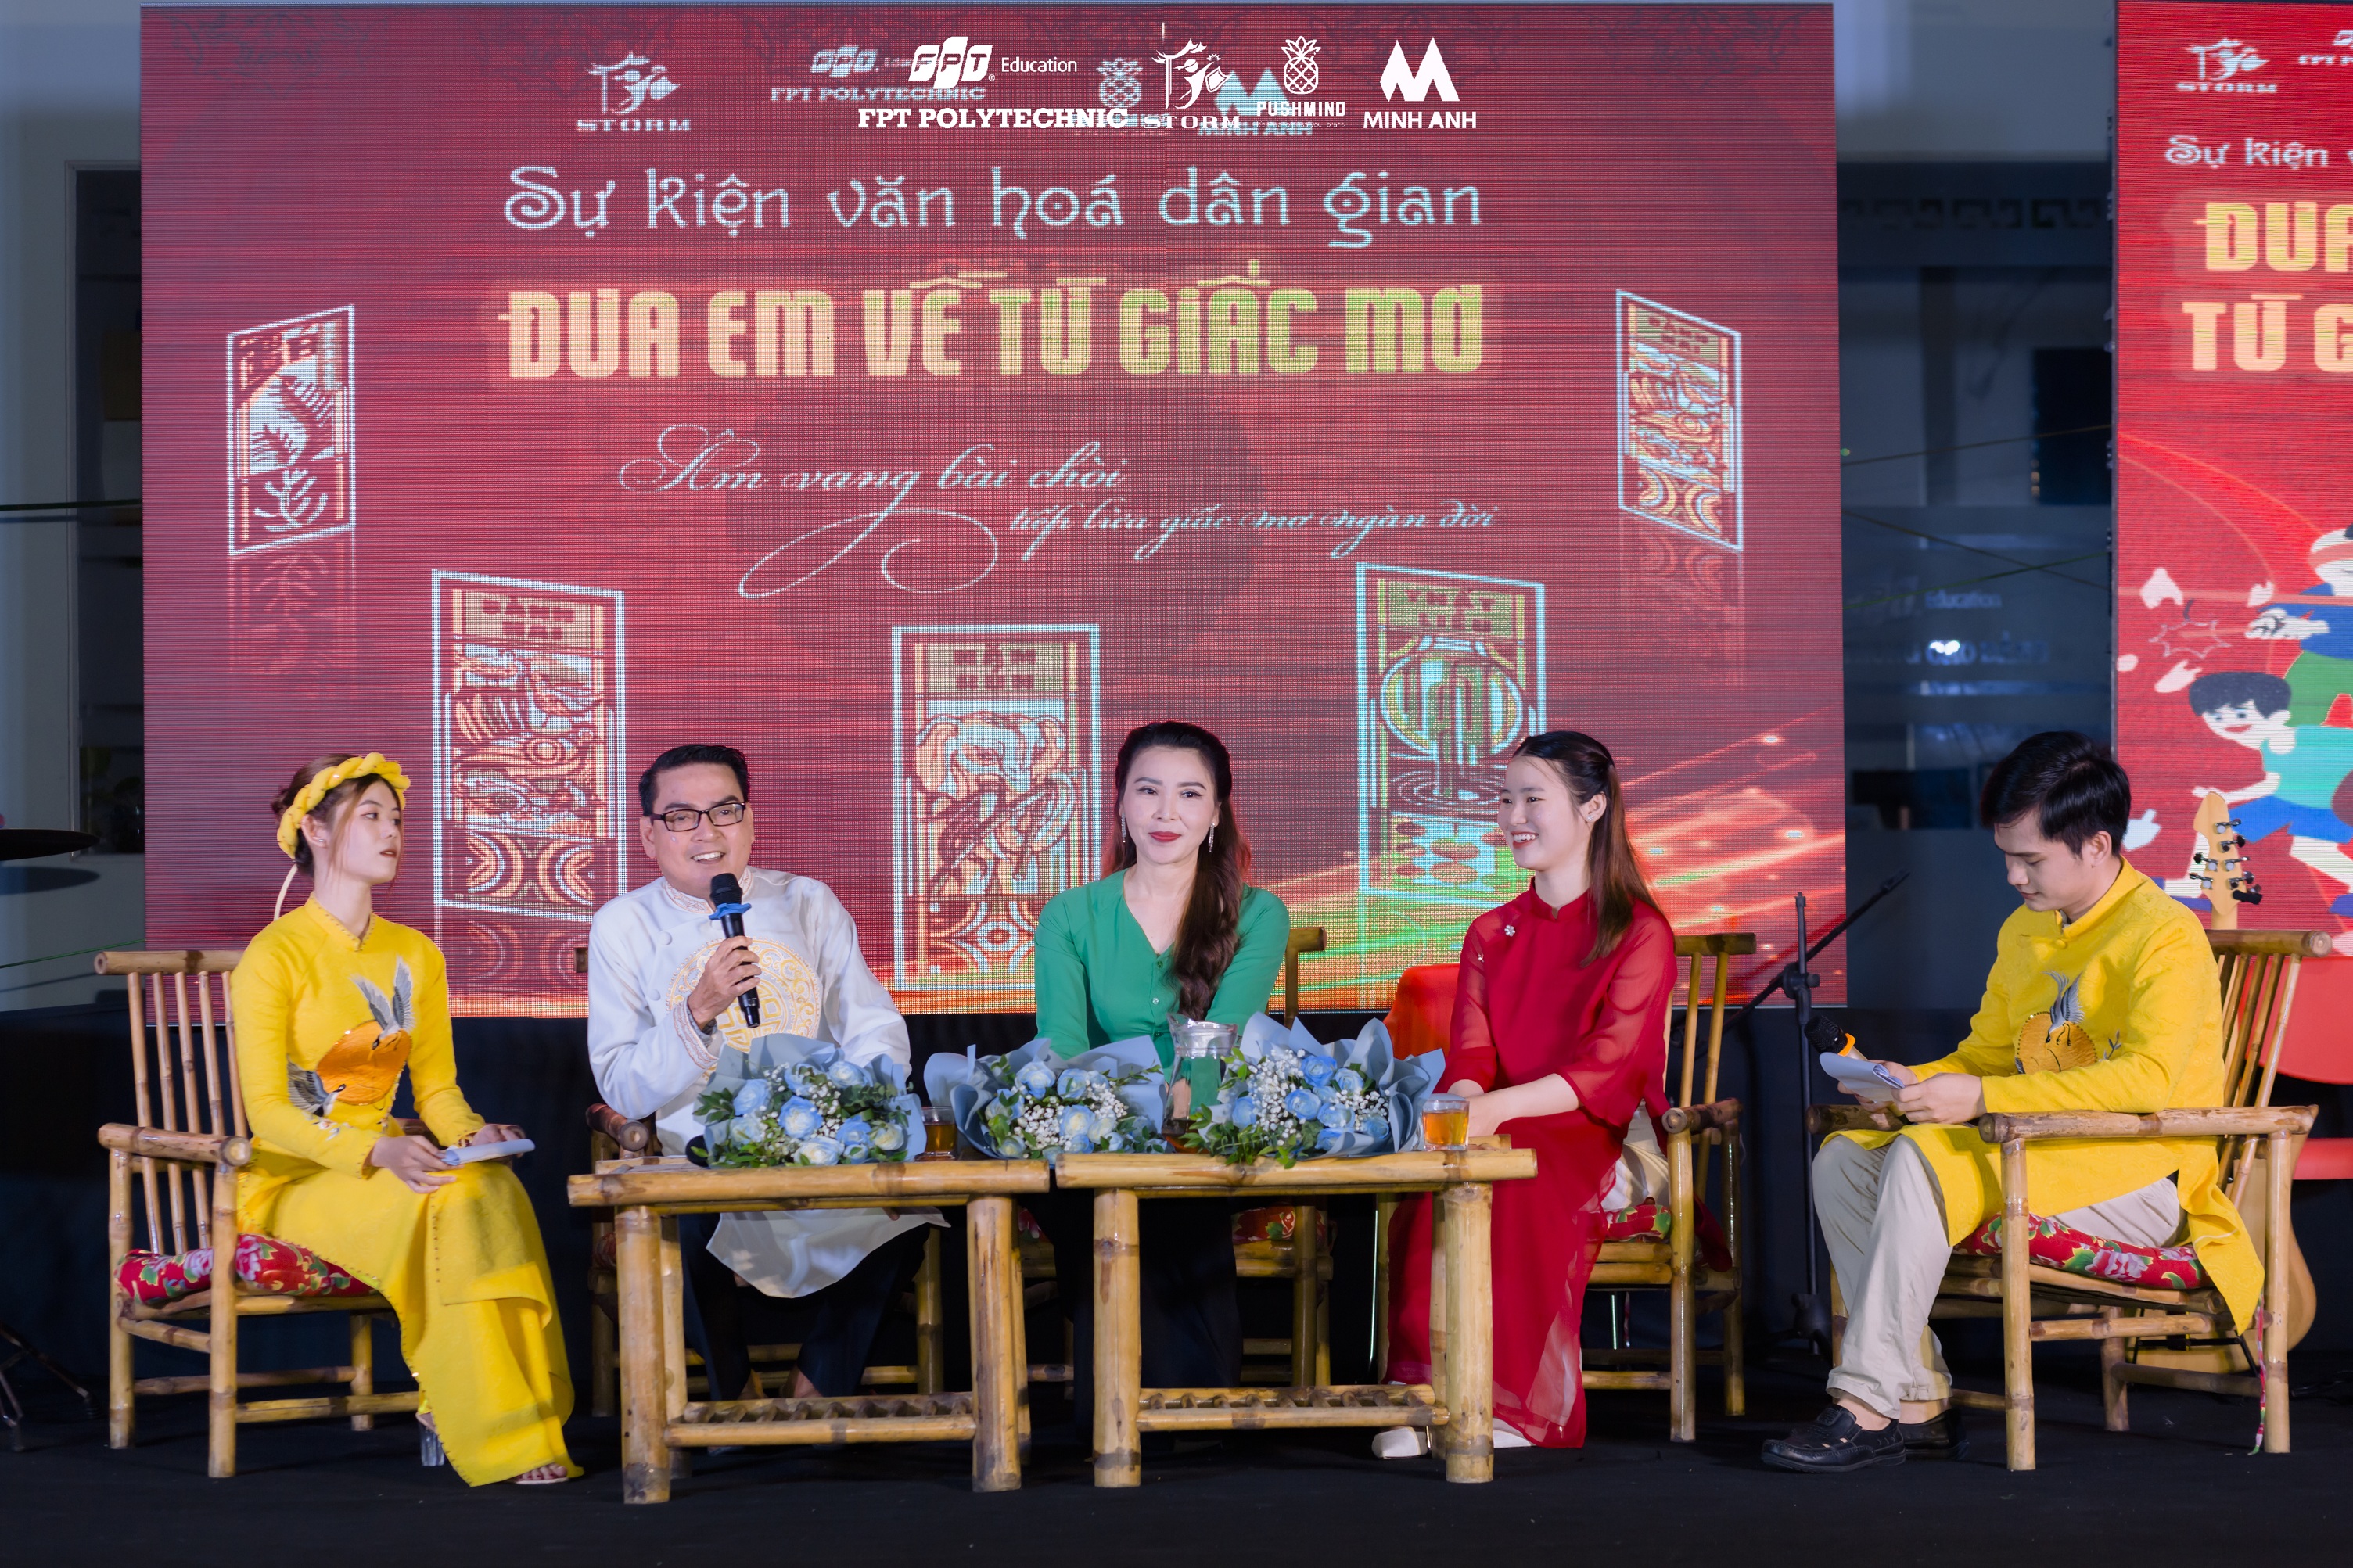 Programme aims to bring 'bai choi' closer to young generation in Da Nang